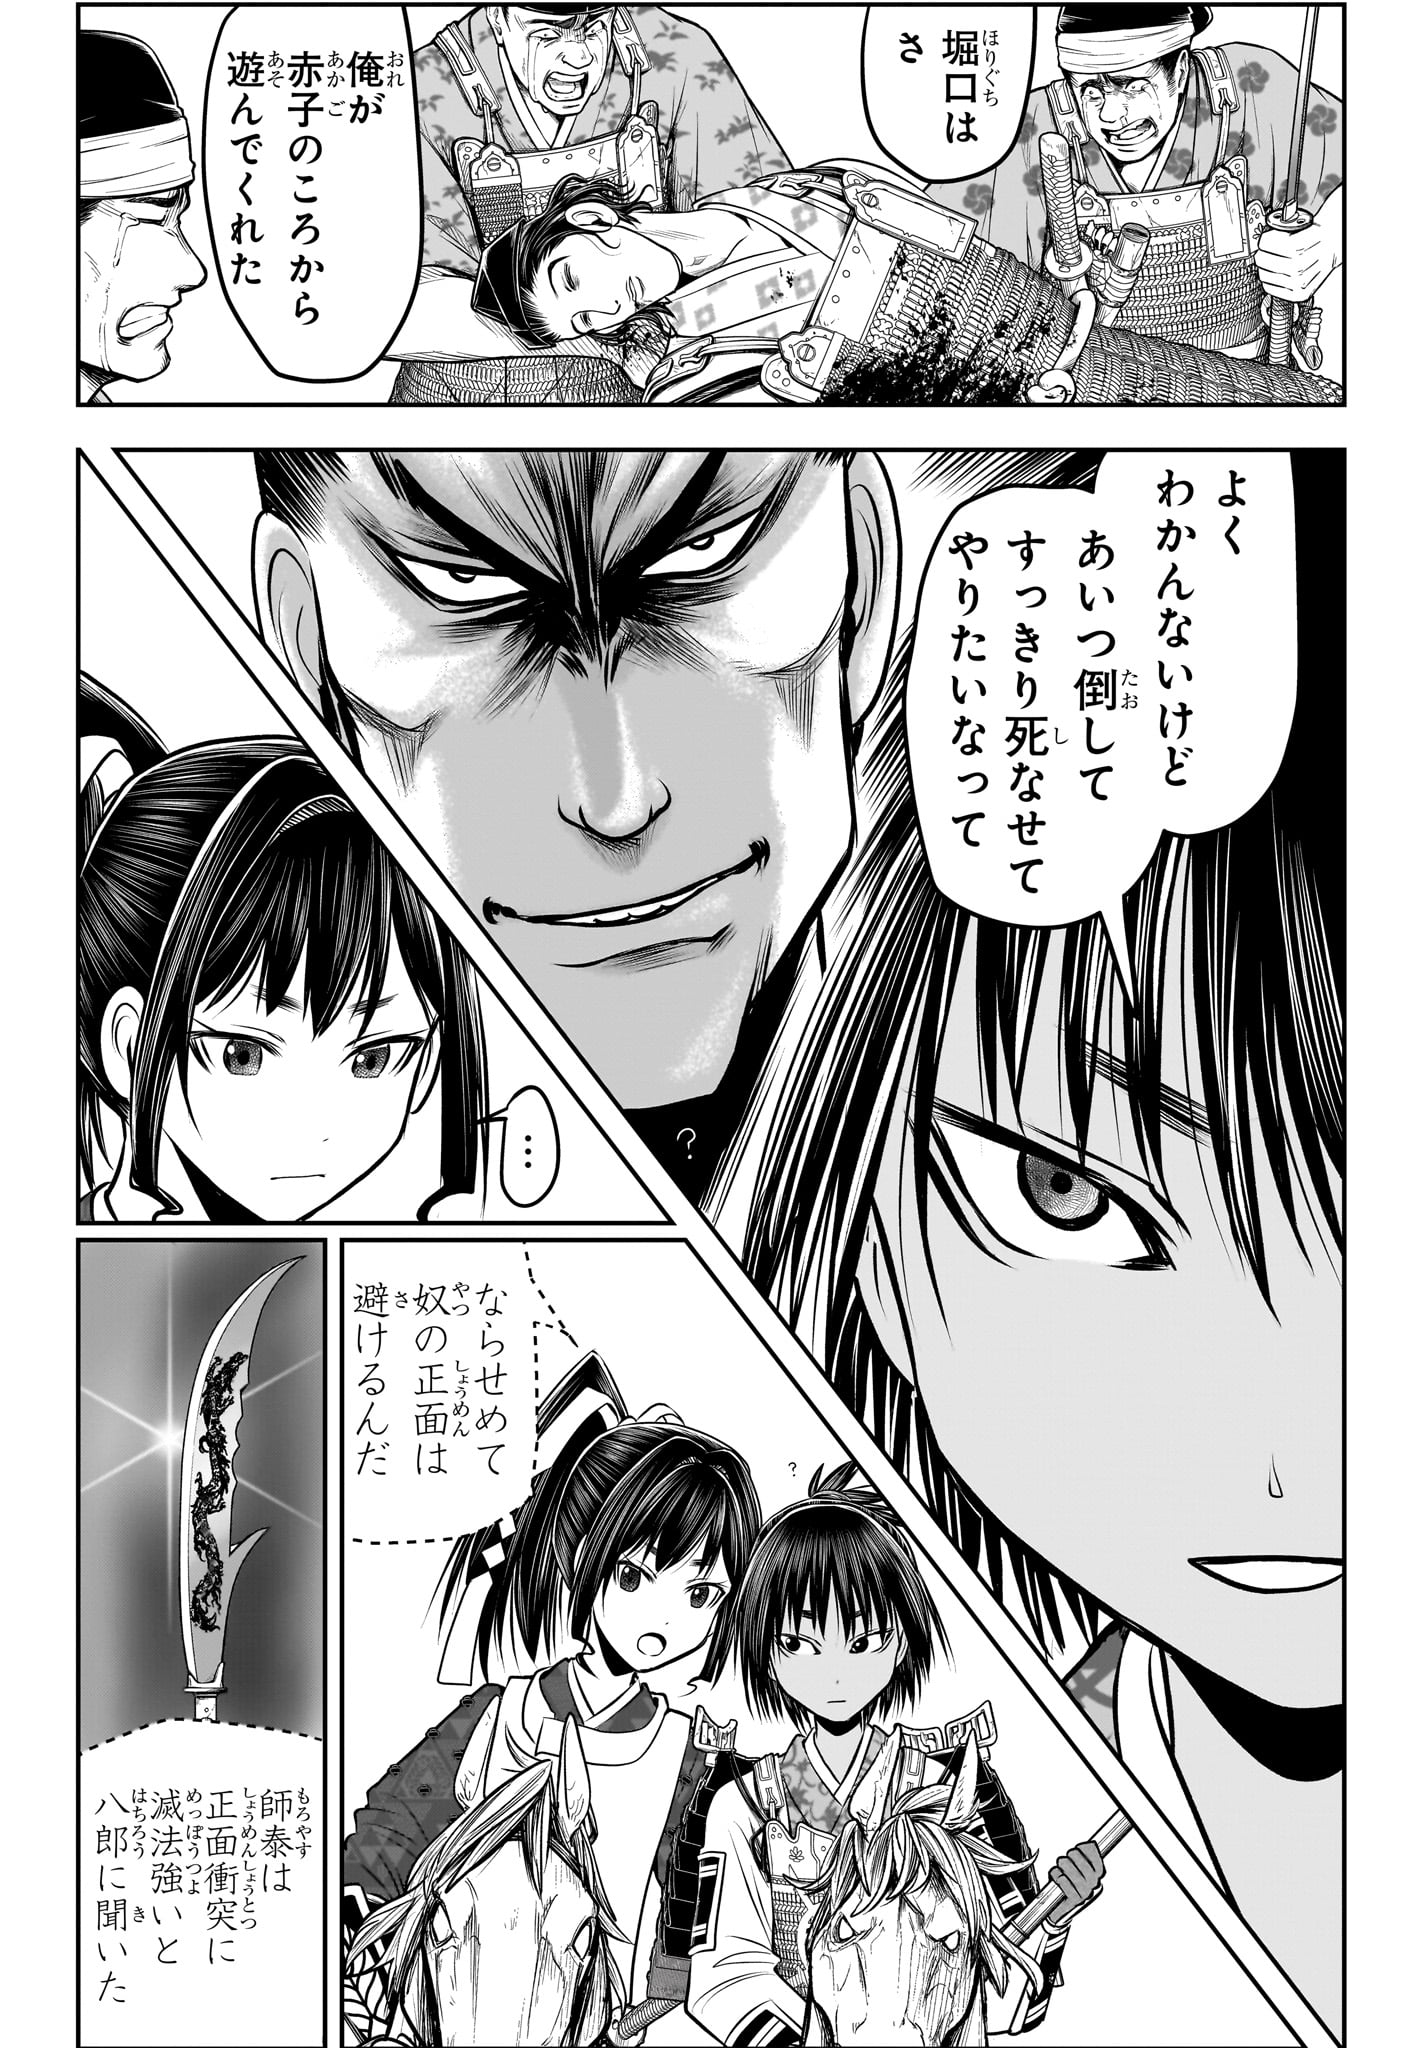 Nige Jouzu no Wakagimi - Chapter 159 - Page 2